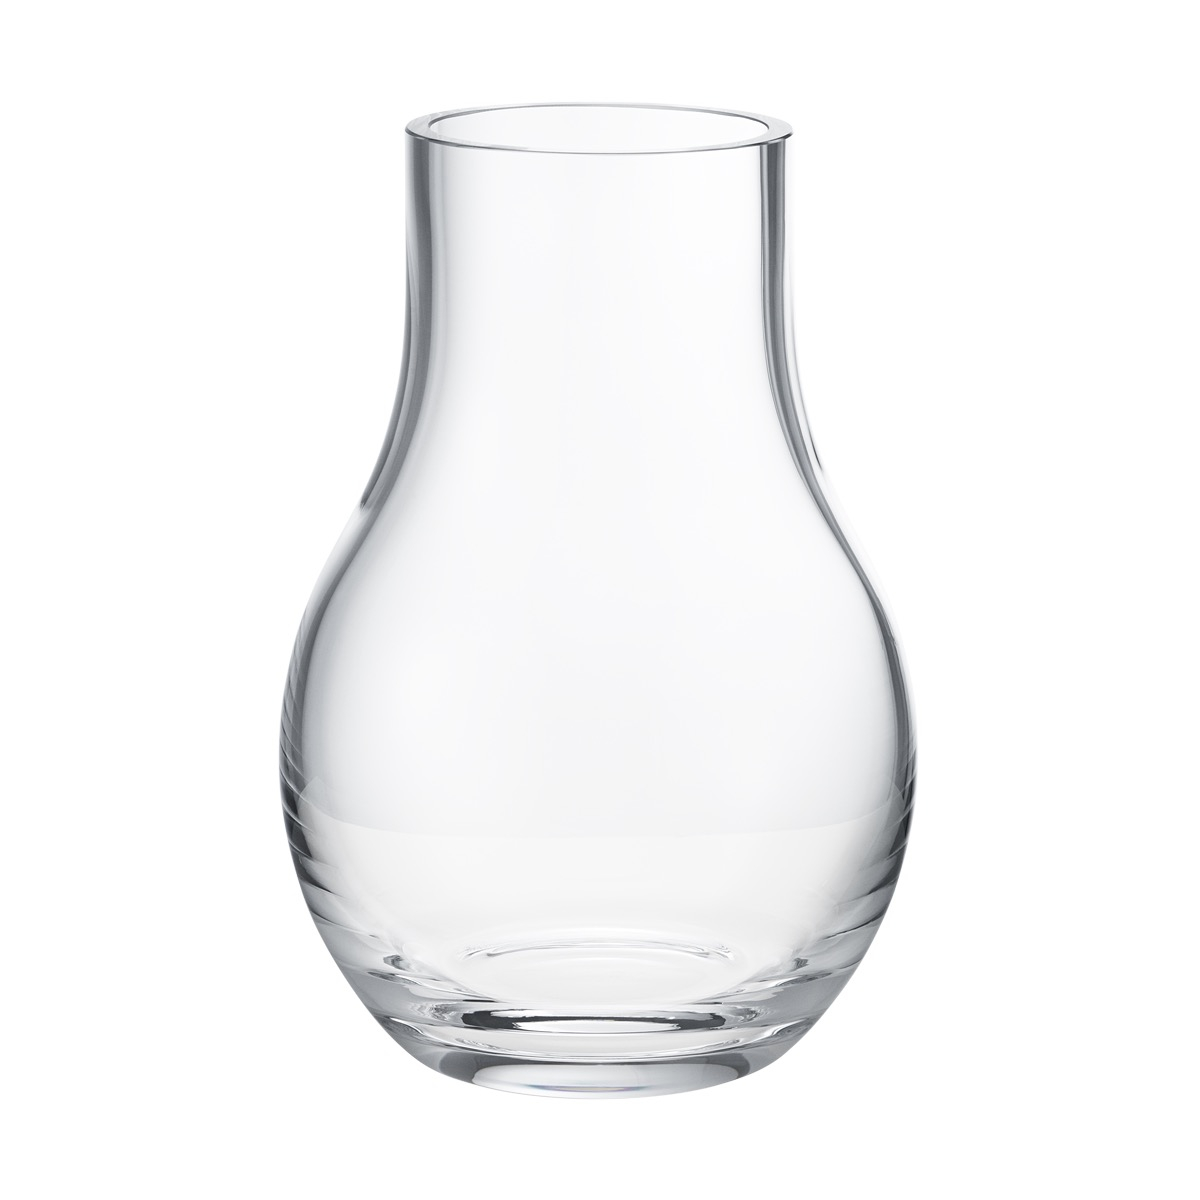 Vaso de vidro Cafu, pequeno - Georg Jensen